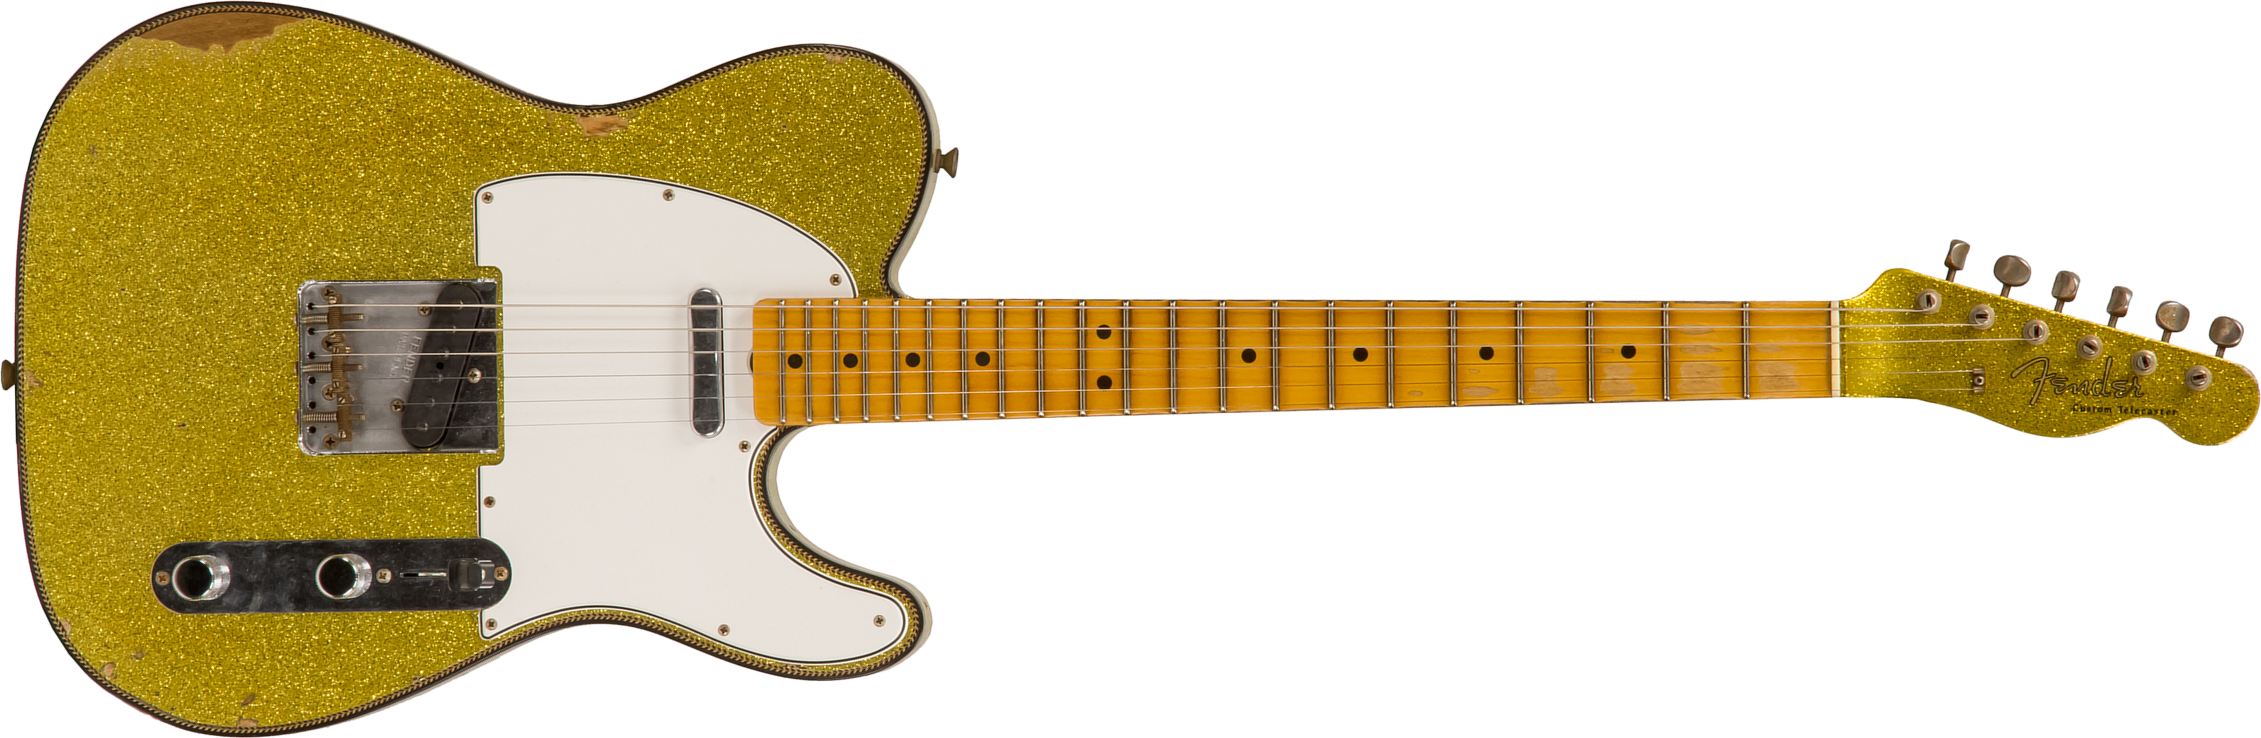 Fender Custom Shop Tele Custom 1963 2020 Ltd Rw #cz545983 - Relic Chartreuse Sparkle - Televorm elektrische gitaar - Main picture